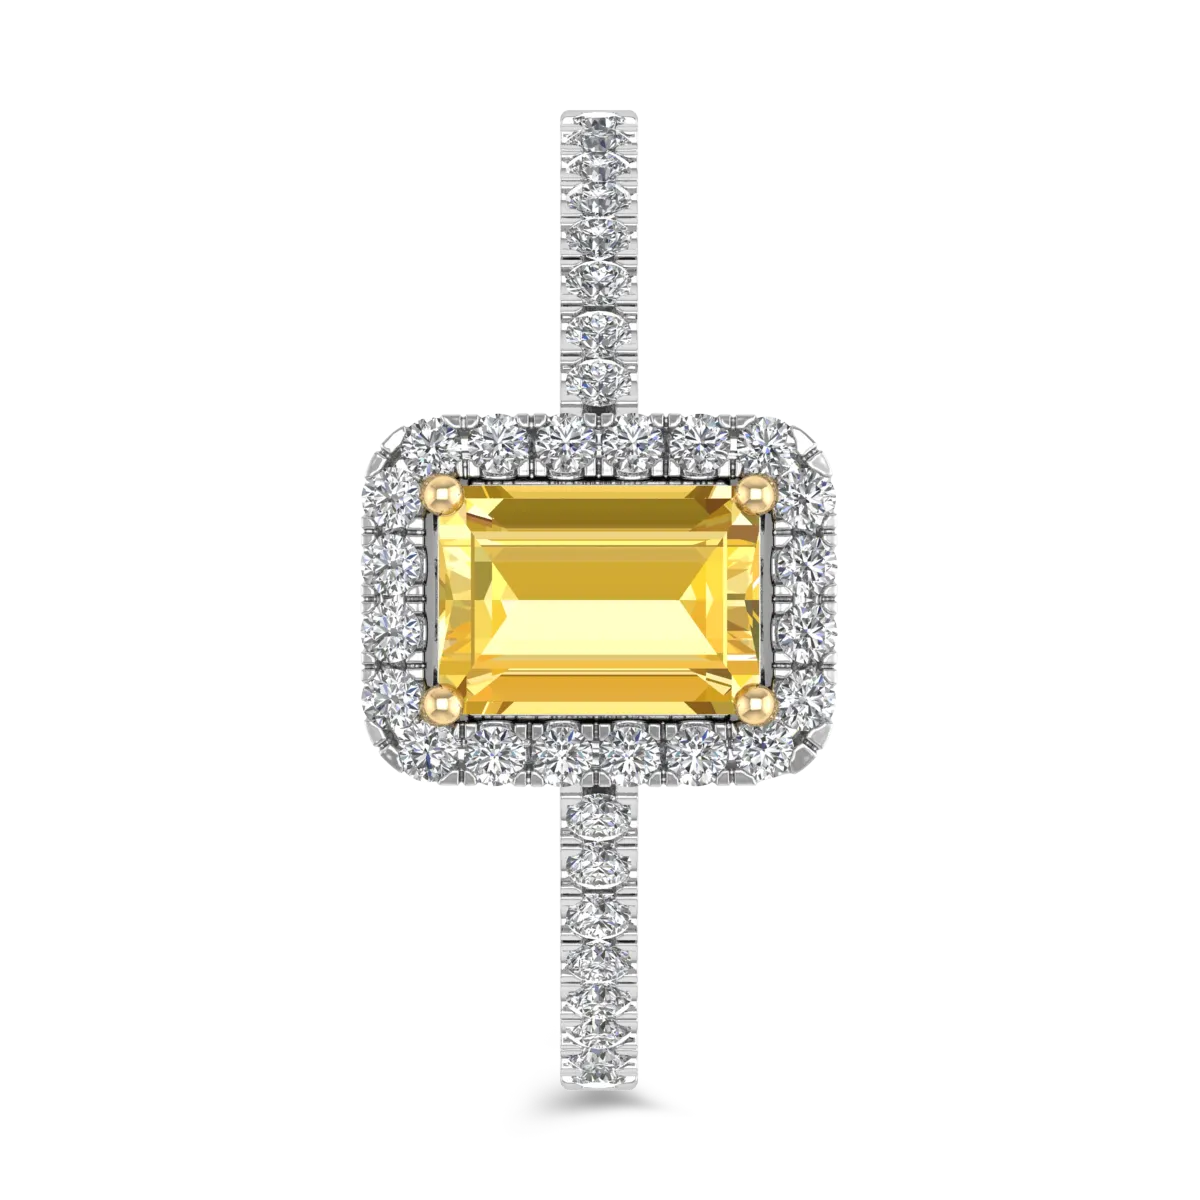 Inel de logodna din aur alb de 18K cu safir galben de 0.66ct si diamante de 0.28ct